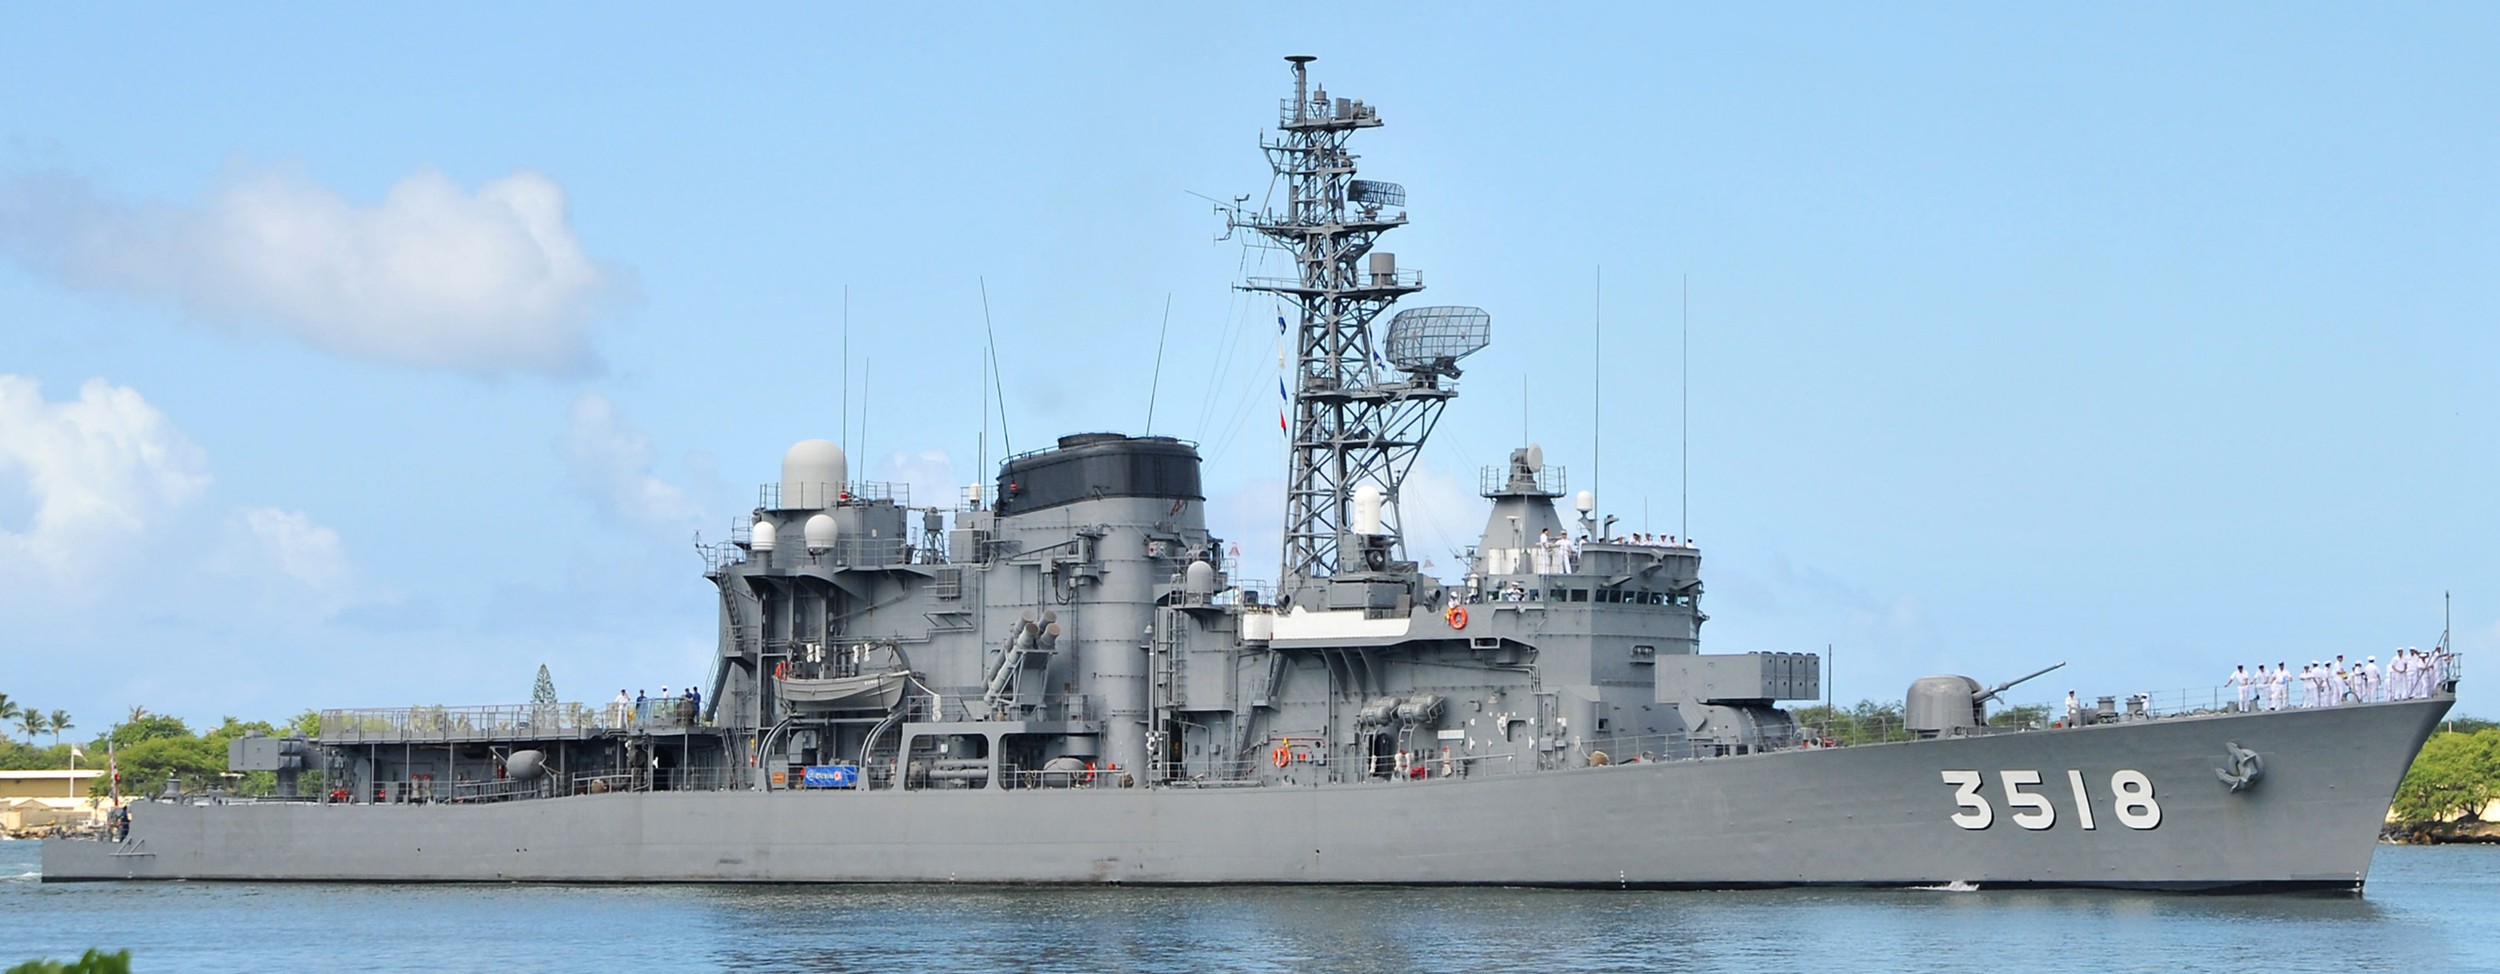 dd-131 tv-3518 jds setoyuki hatsuyuki class destroyer japan maritime self defense force jmsdf 04